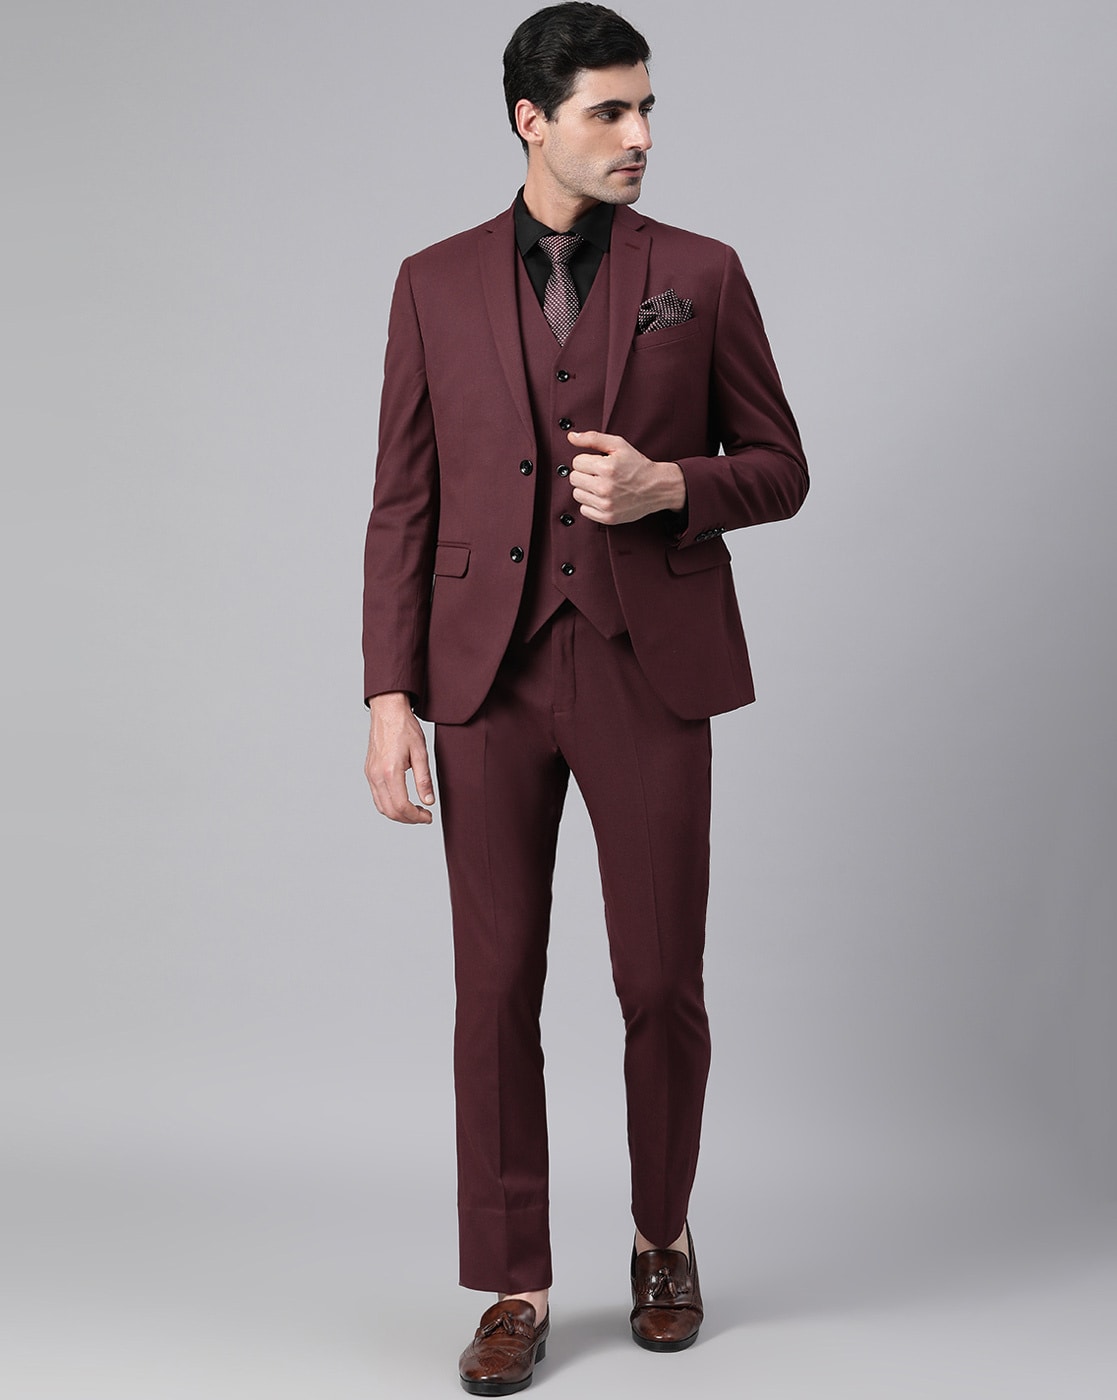 Buy Arvind Men Wine Tailored Regular Fit Three Piece Suit(Brown,42,8904290700892)  at Amazon.in